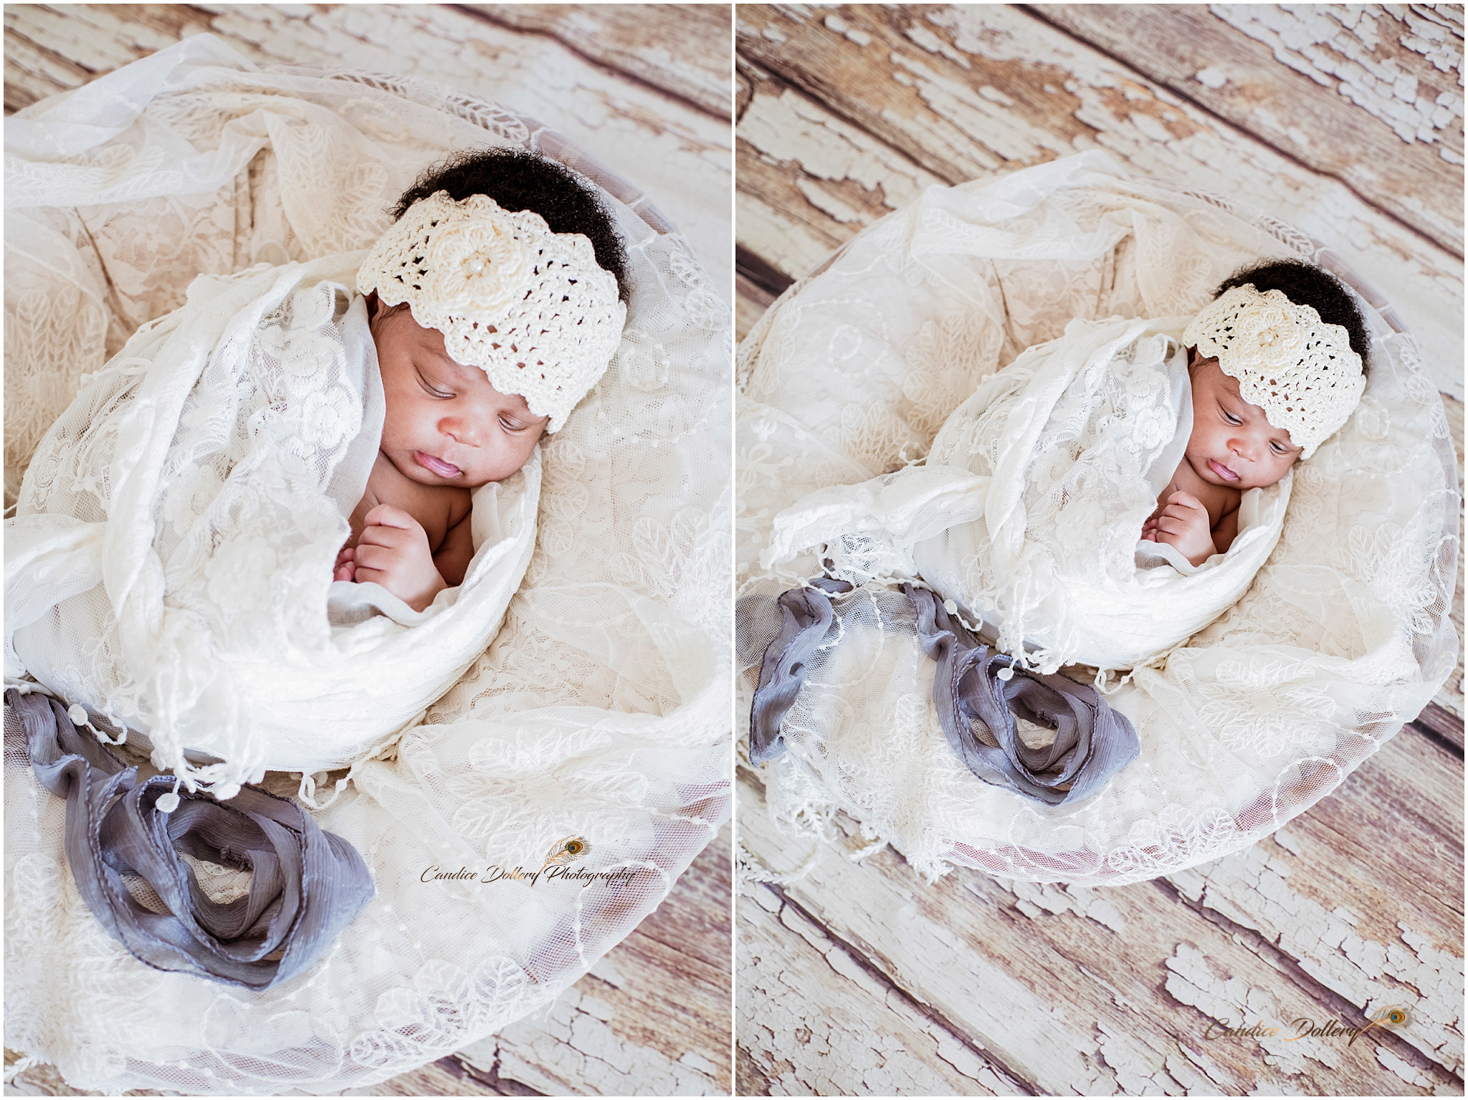 Newborn - Candice Dollery Photography_003